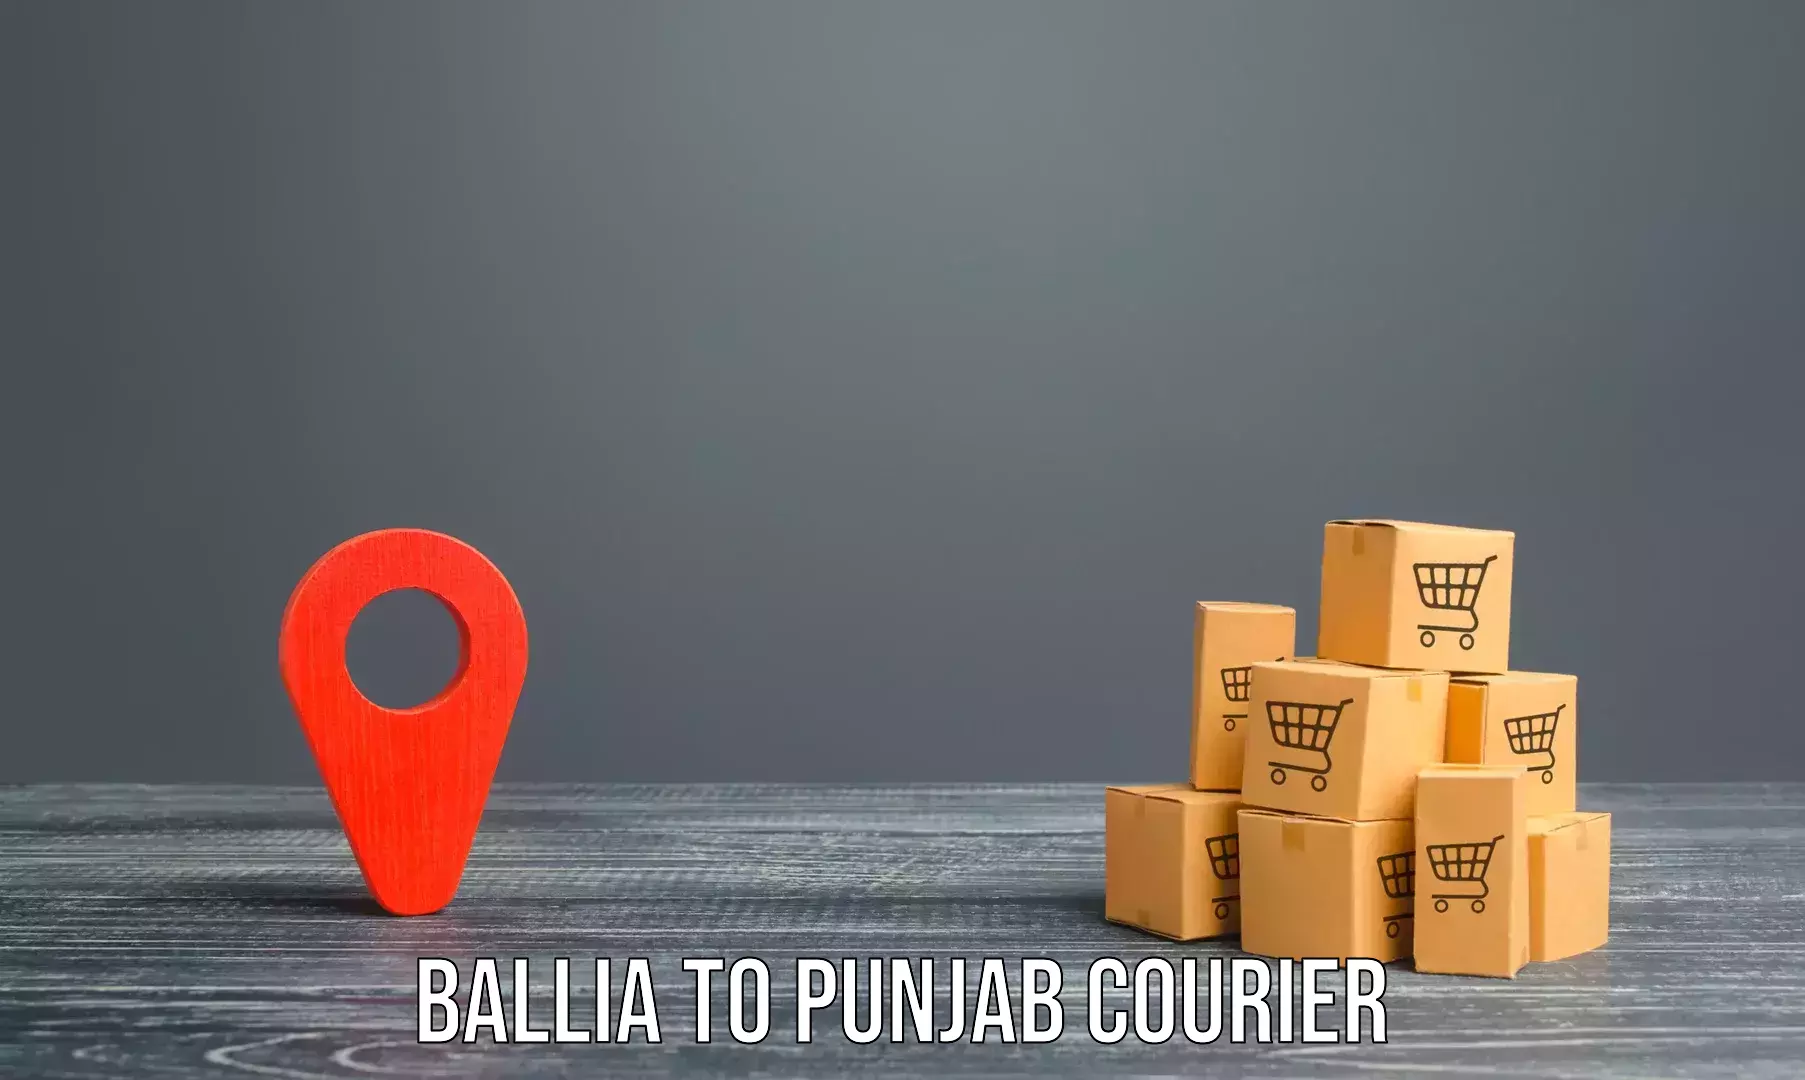 Professional moving company Ballia to Amritsar